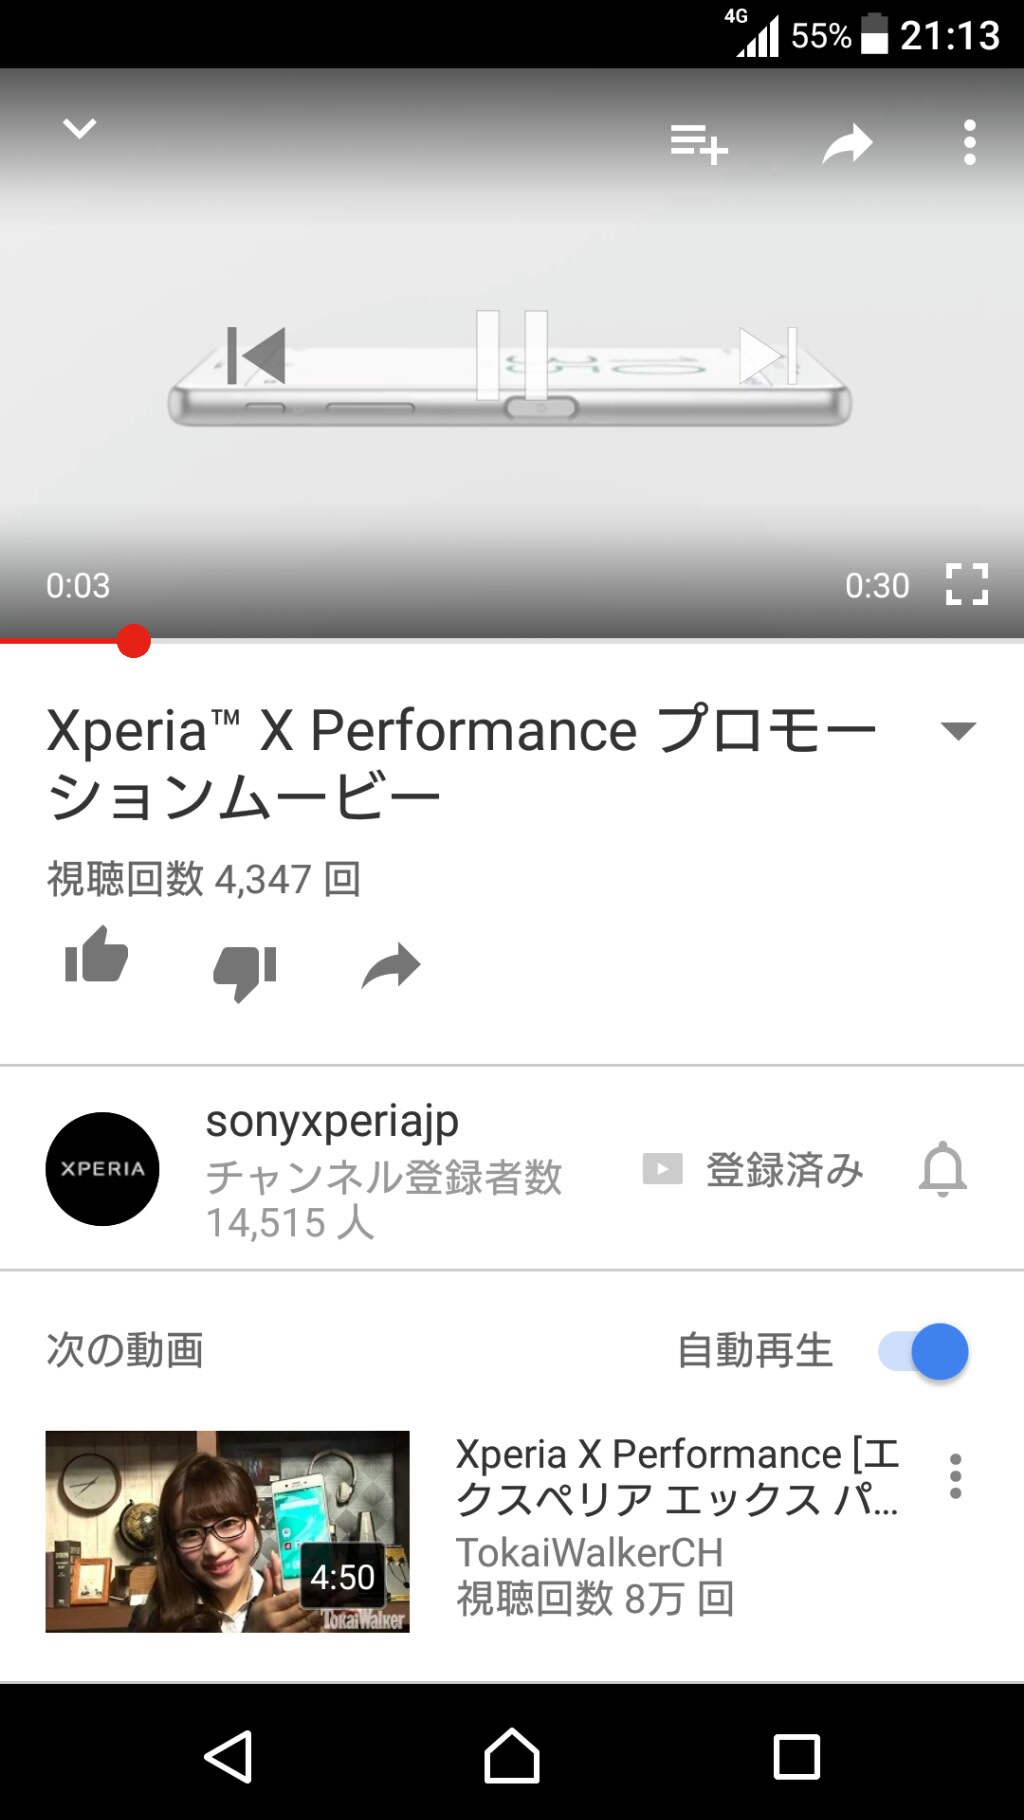 Xperia X Performance タッチパネル不良が発生 叛逆のぺんた